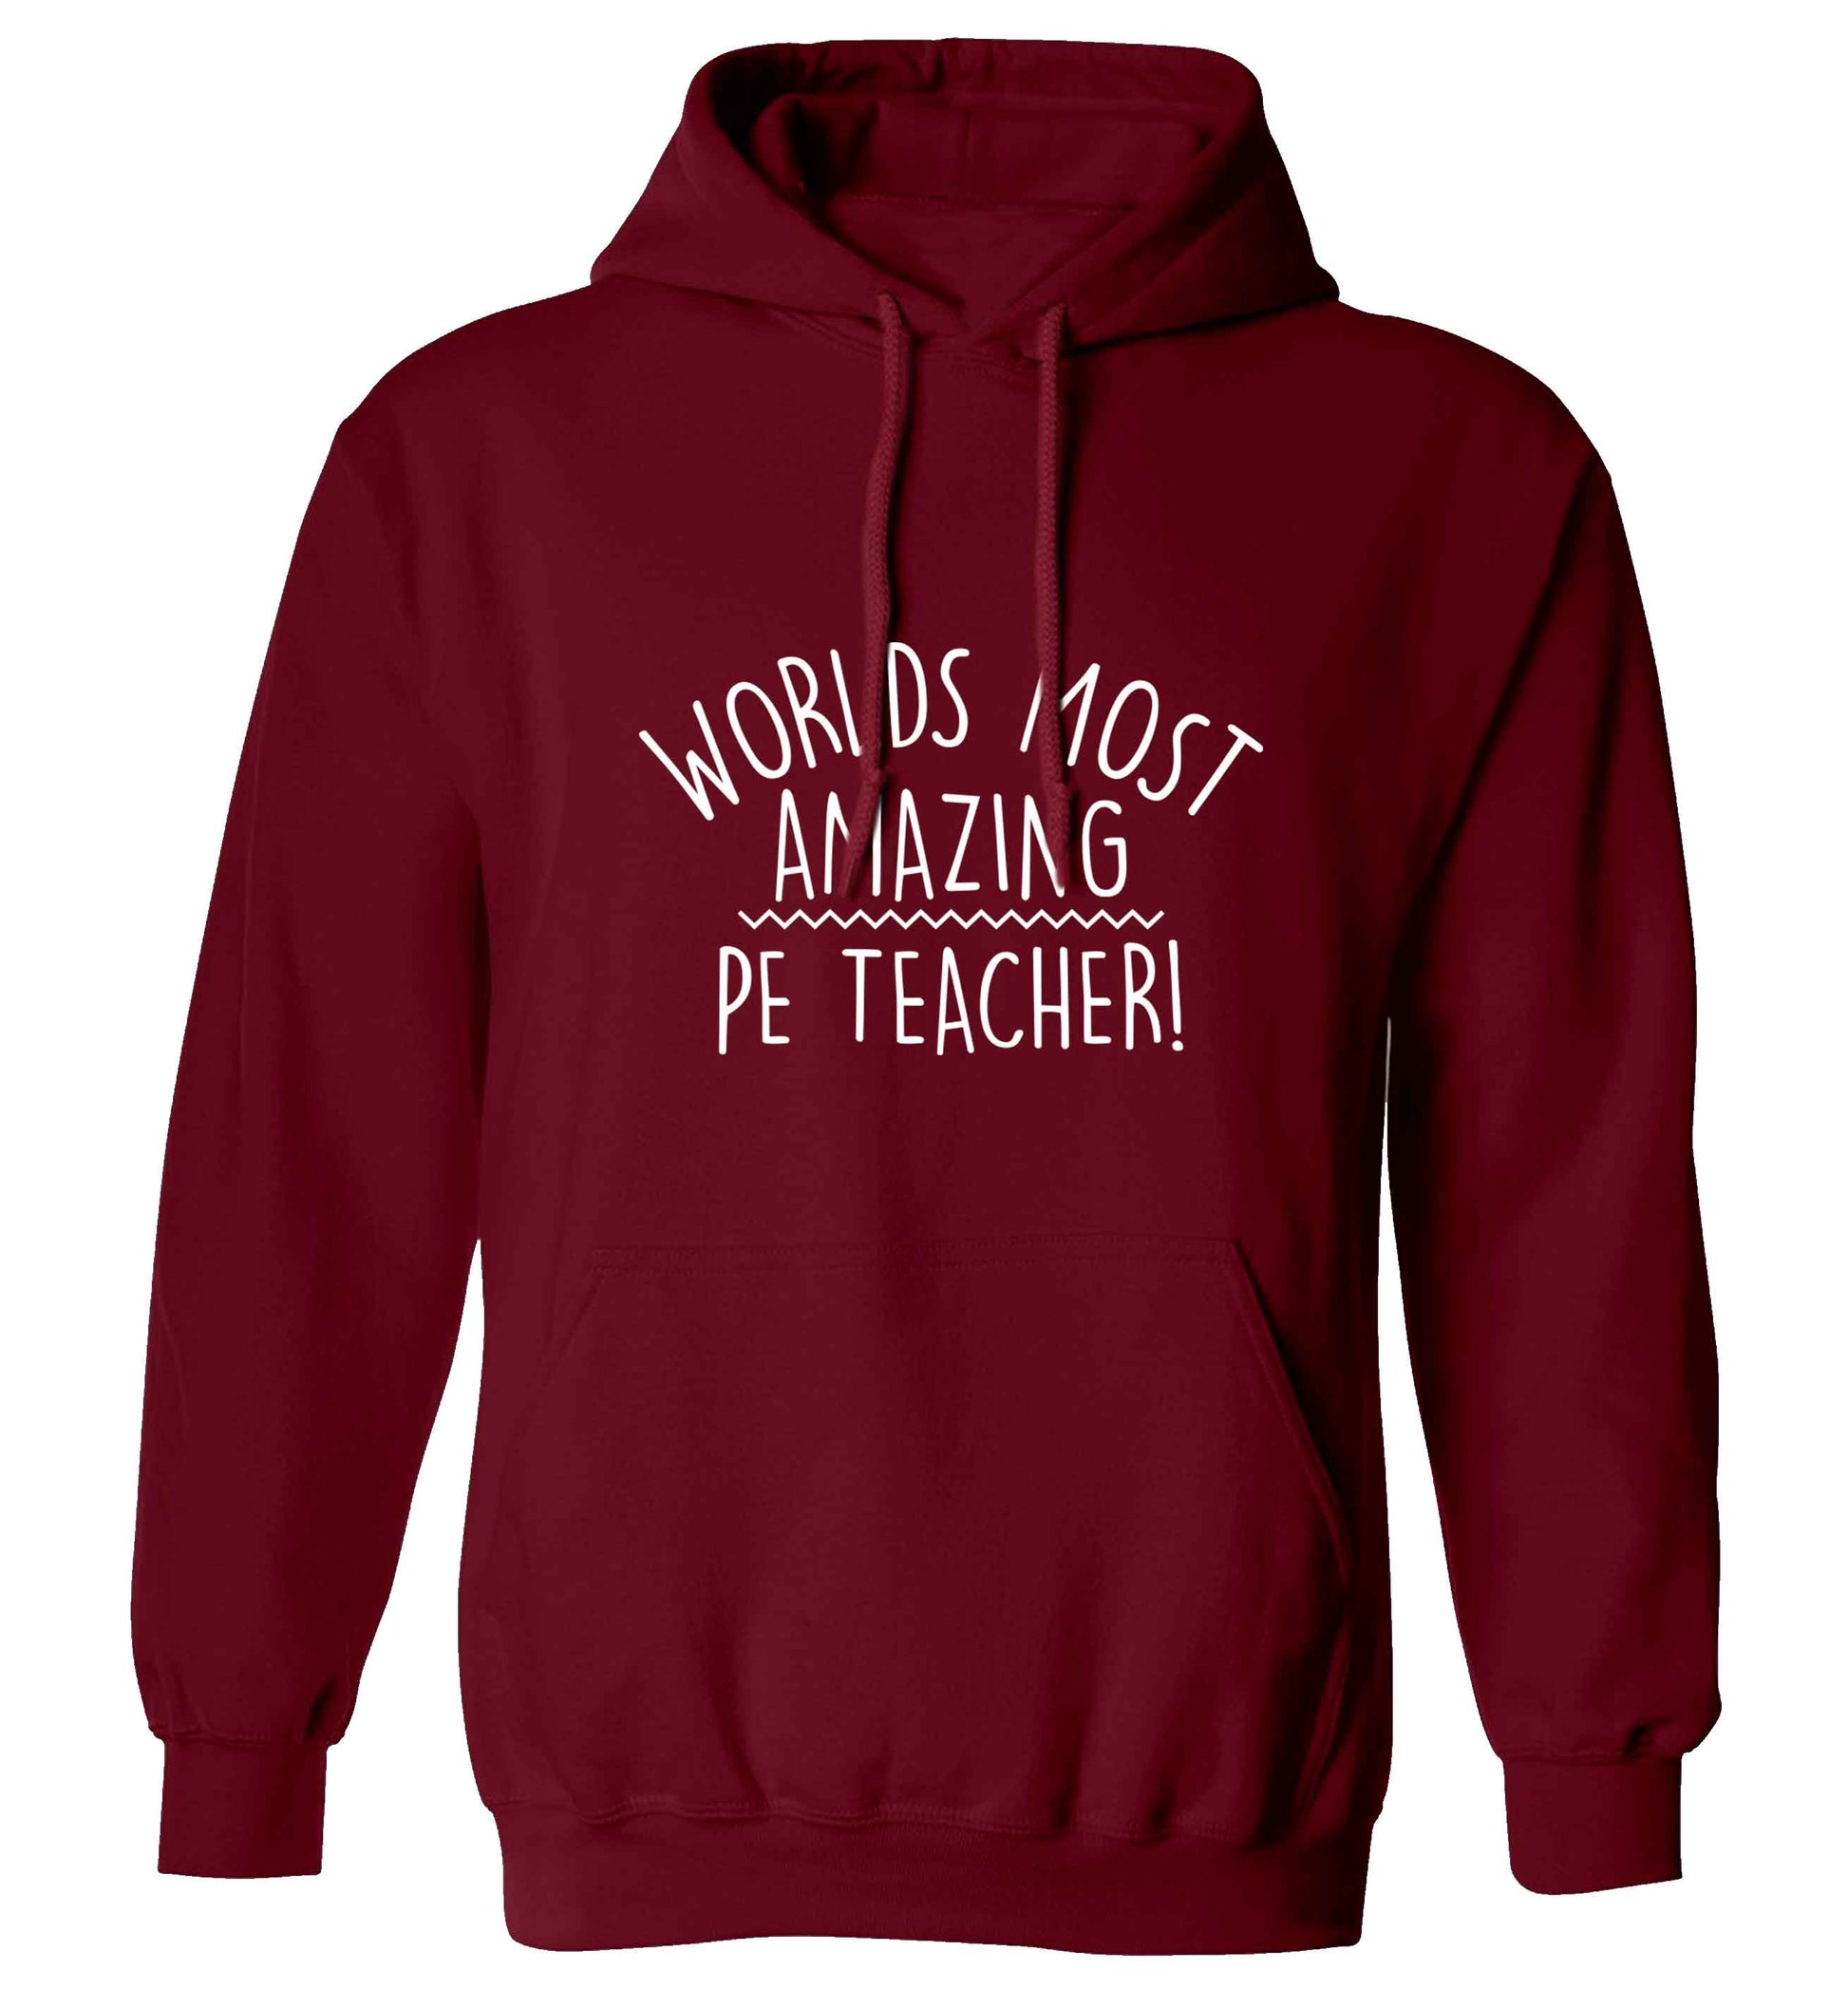 Worlds most amazing PE teacher adults unisex maroon hoodie 2XL